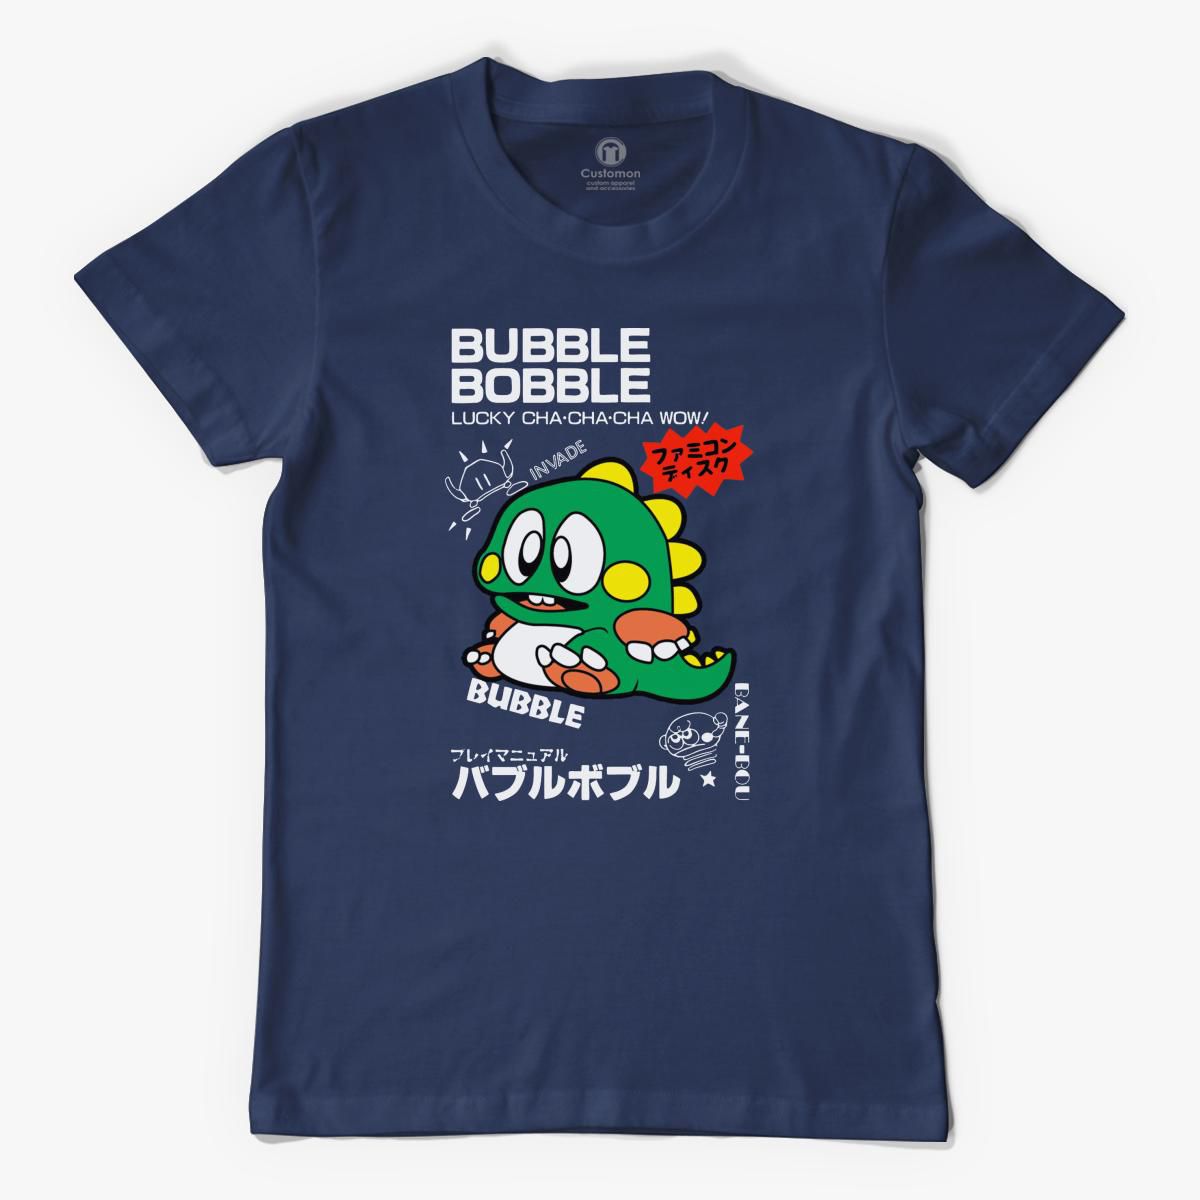 bubble bobble shirt